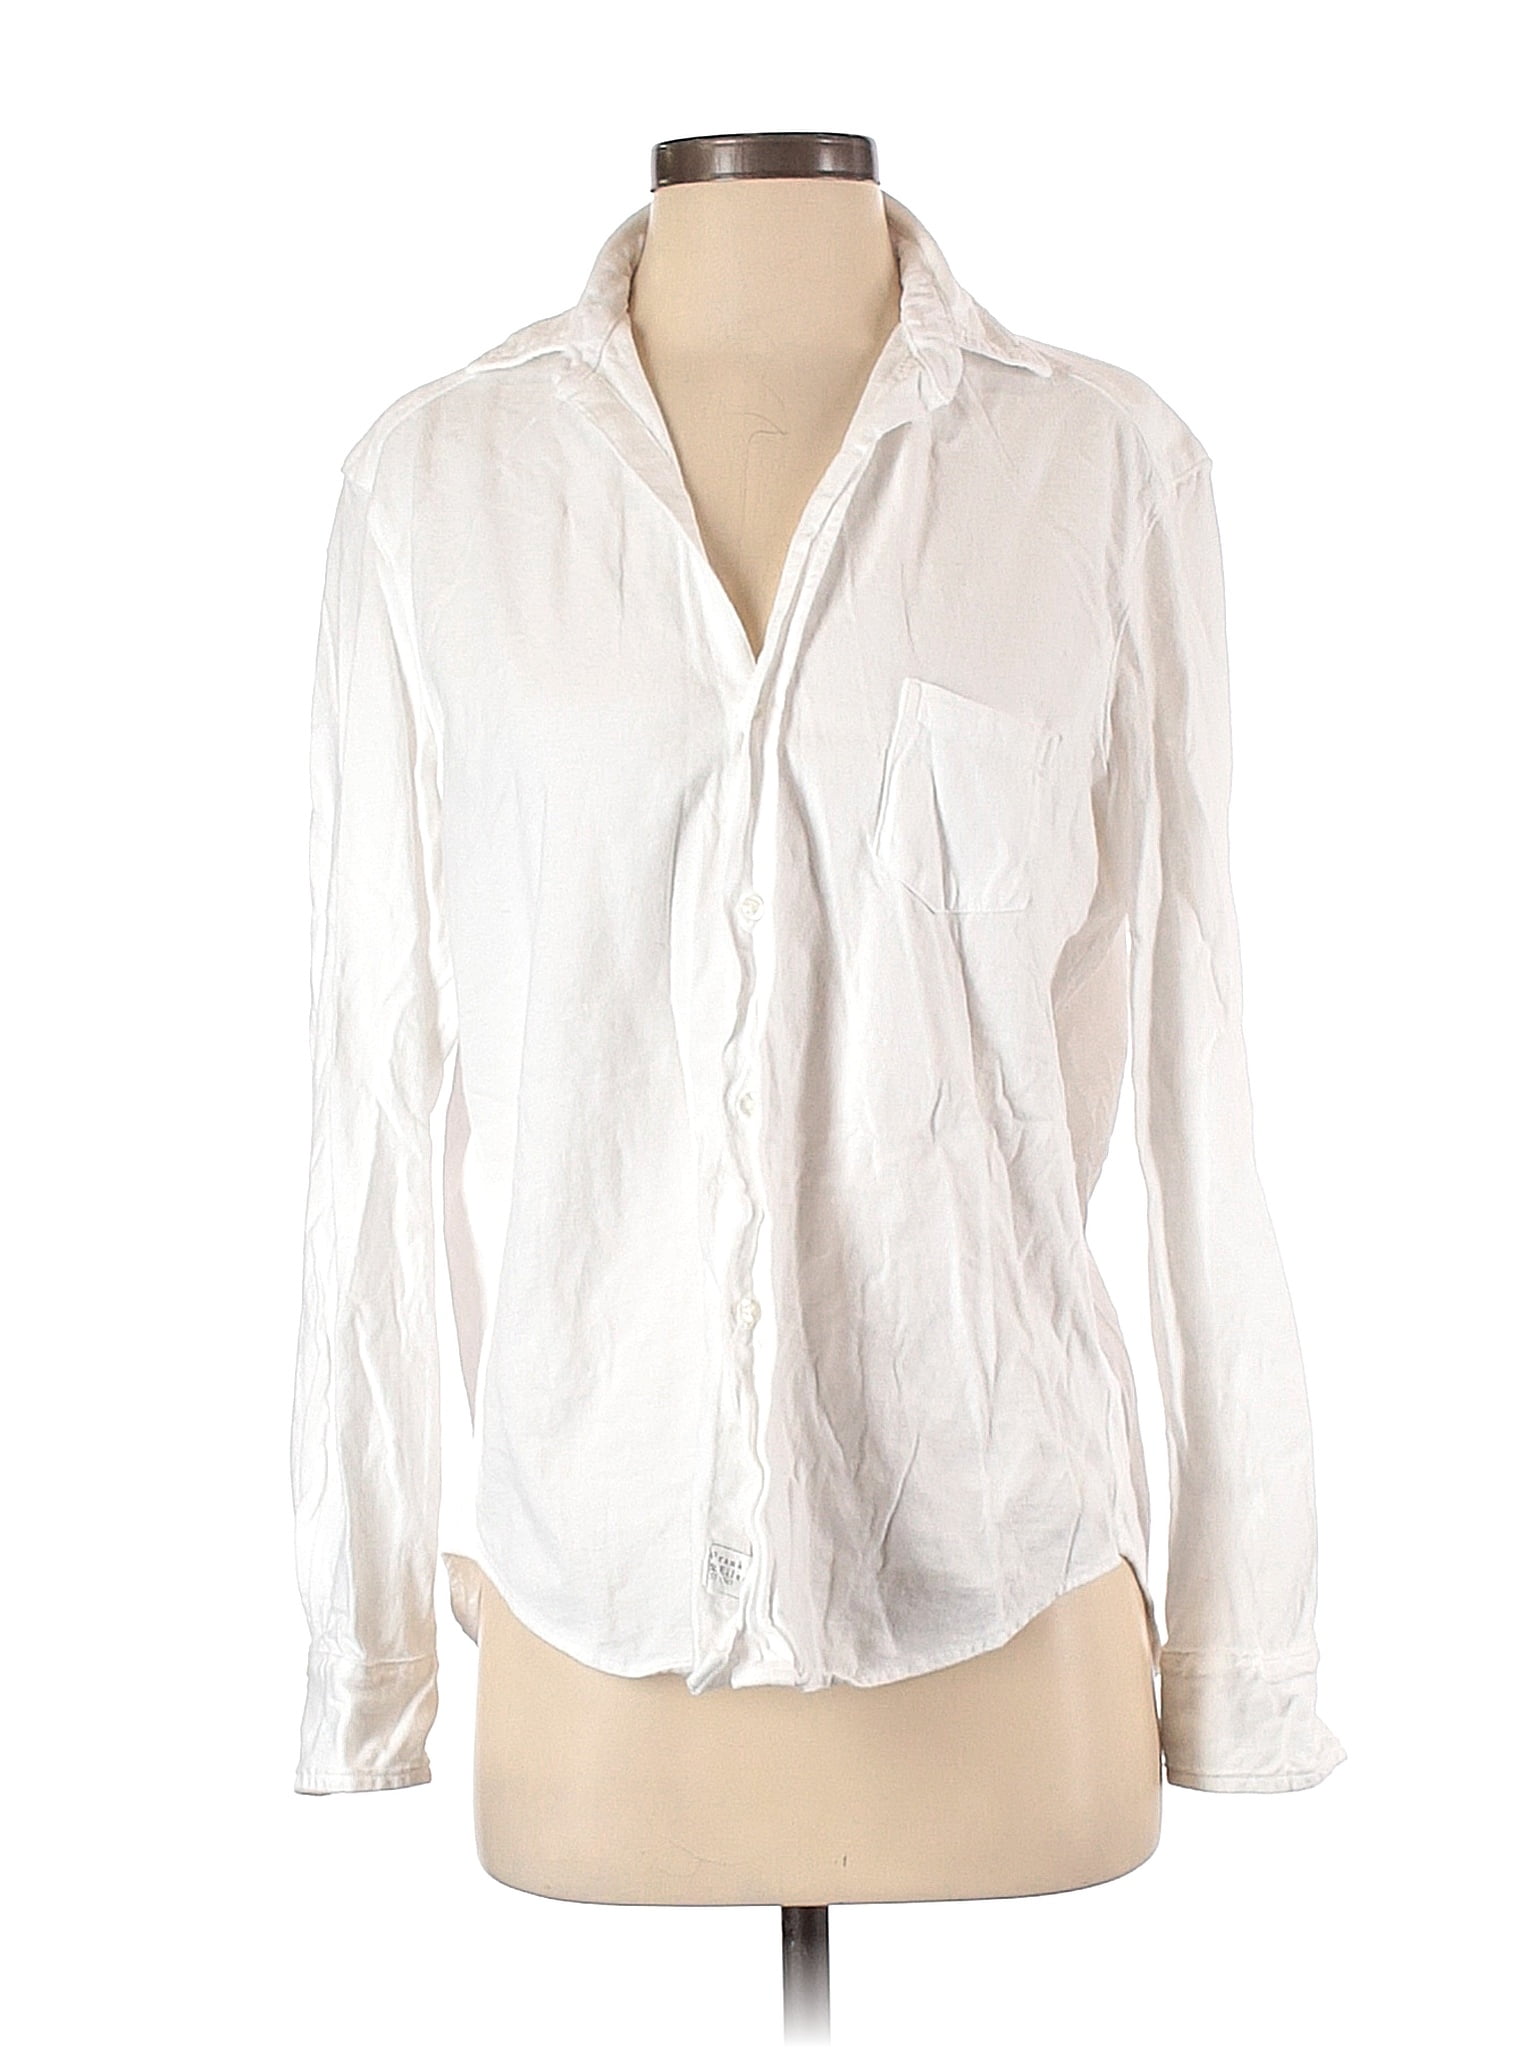 Frank & Eileen 100% Cotton Solid White Sleeveless Button-Down Shirt ...